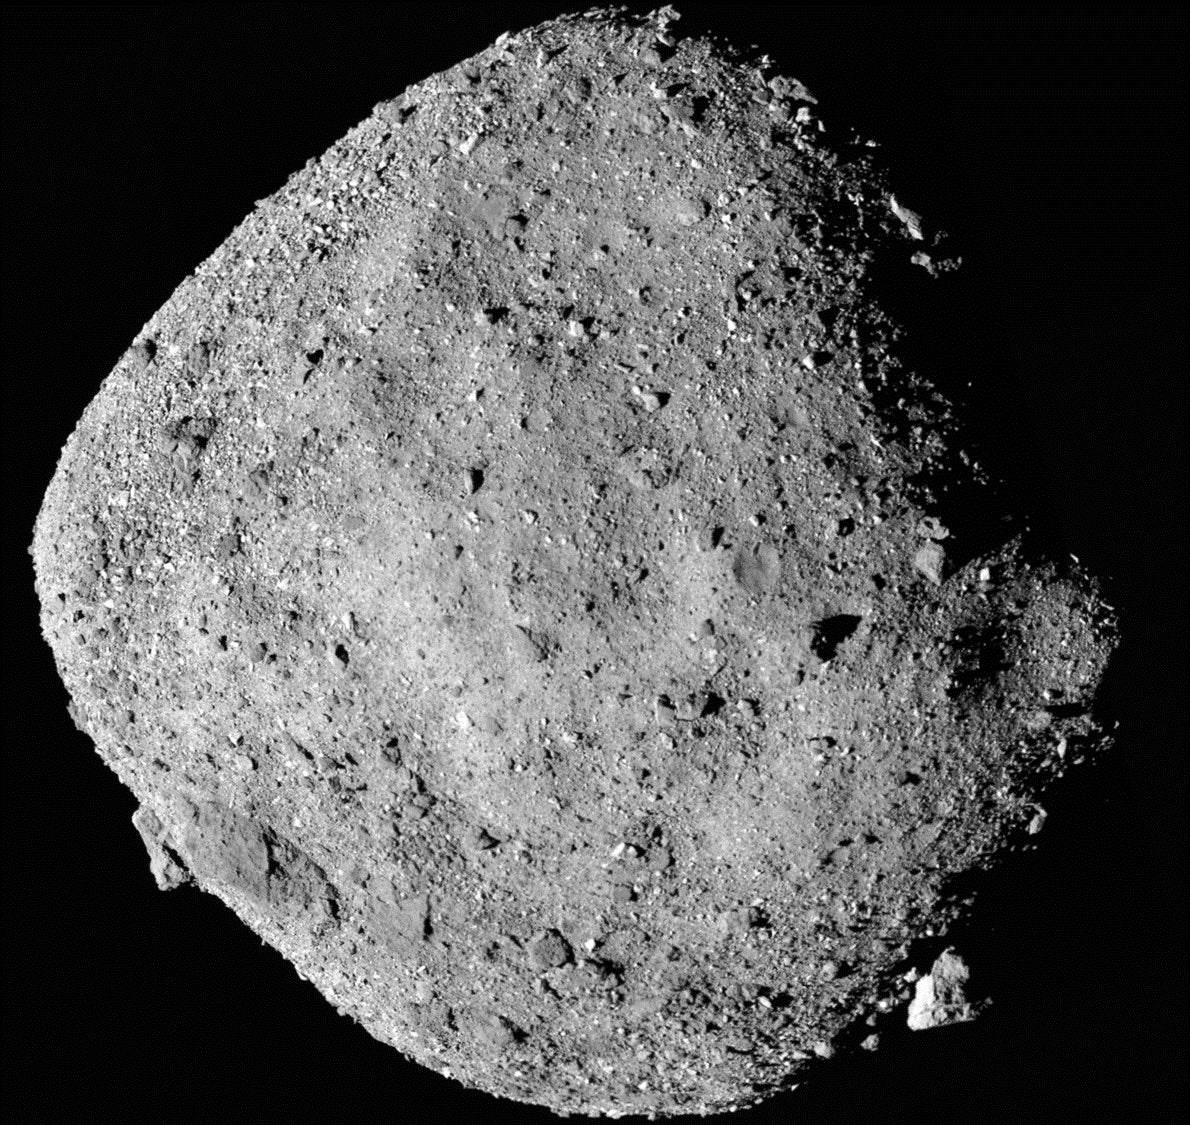 Asteroid Bennu. (Image: NASA/Goddard/University of Arizona)